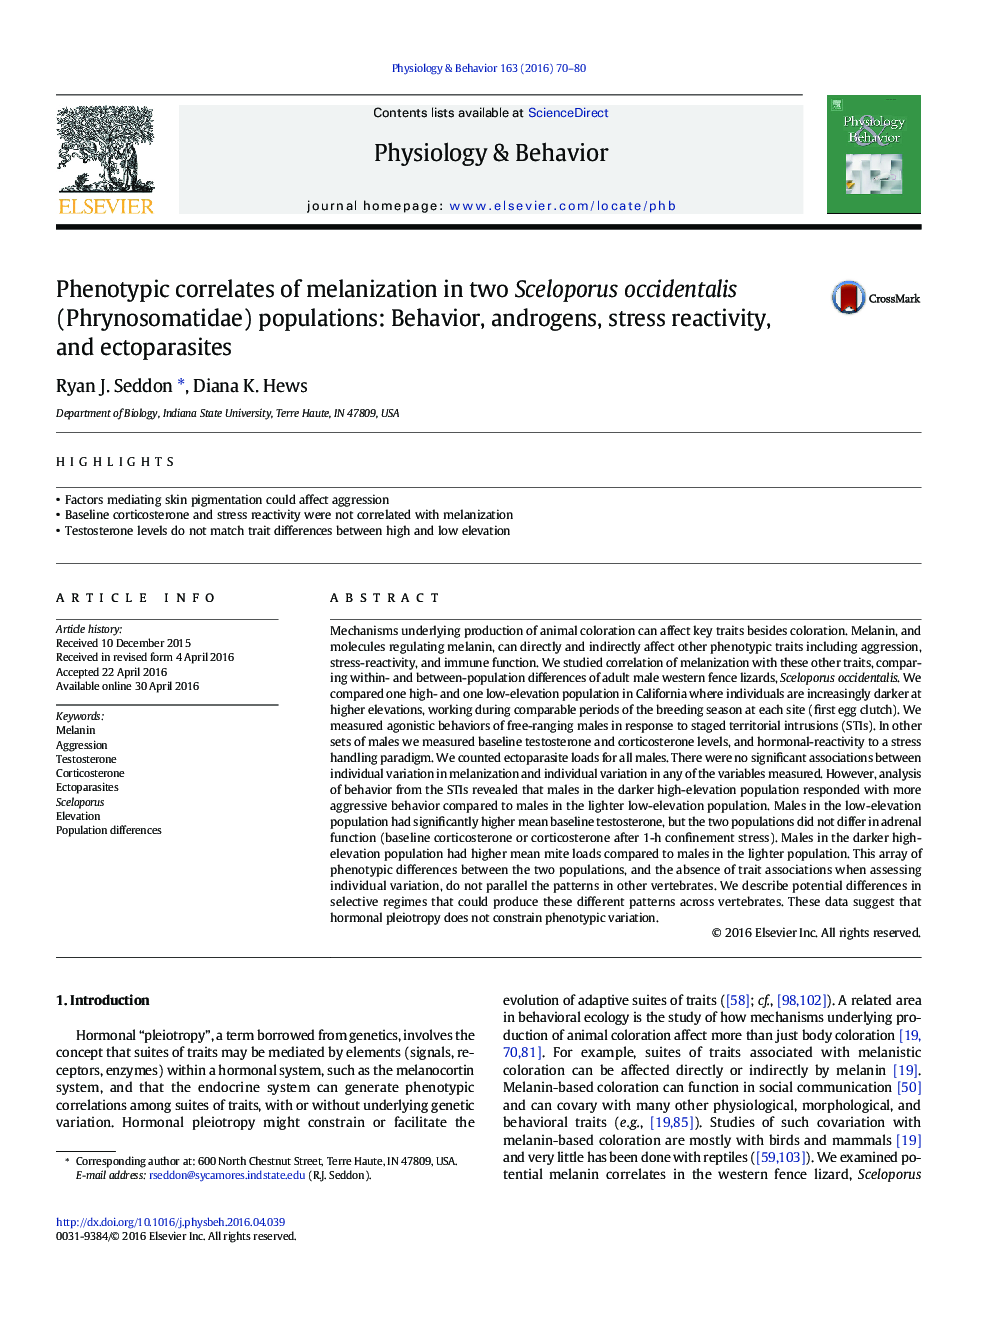 Phenotypic correlates of melanization in two Sceloporus occidentalis (Phrynosomatidae) populations: Behavior, androgens, stress reactivity, and ectoparasites